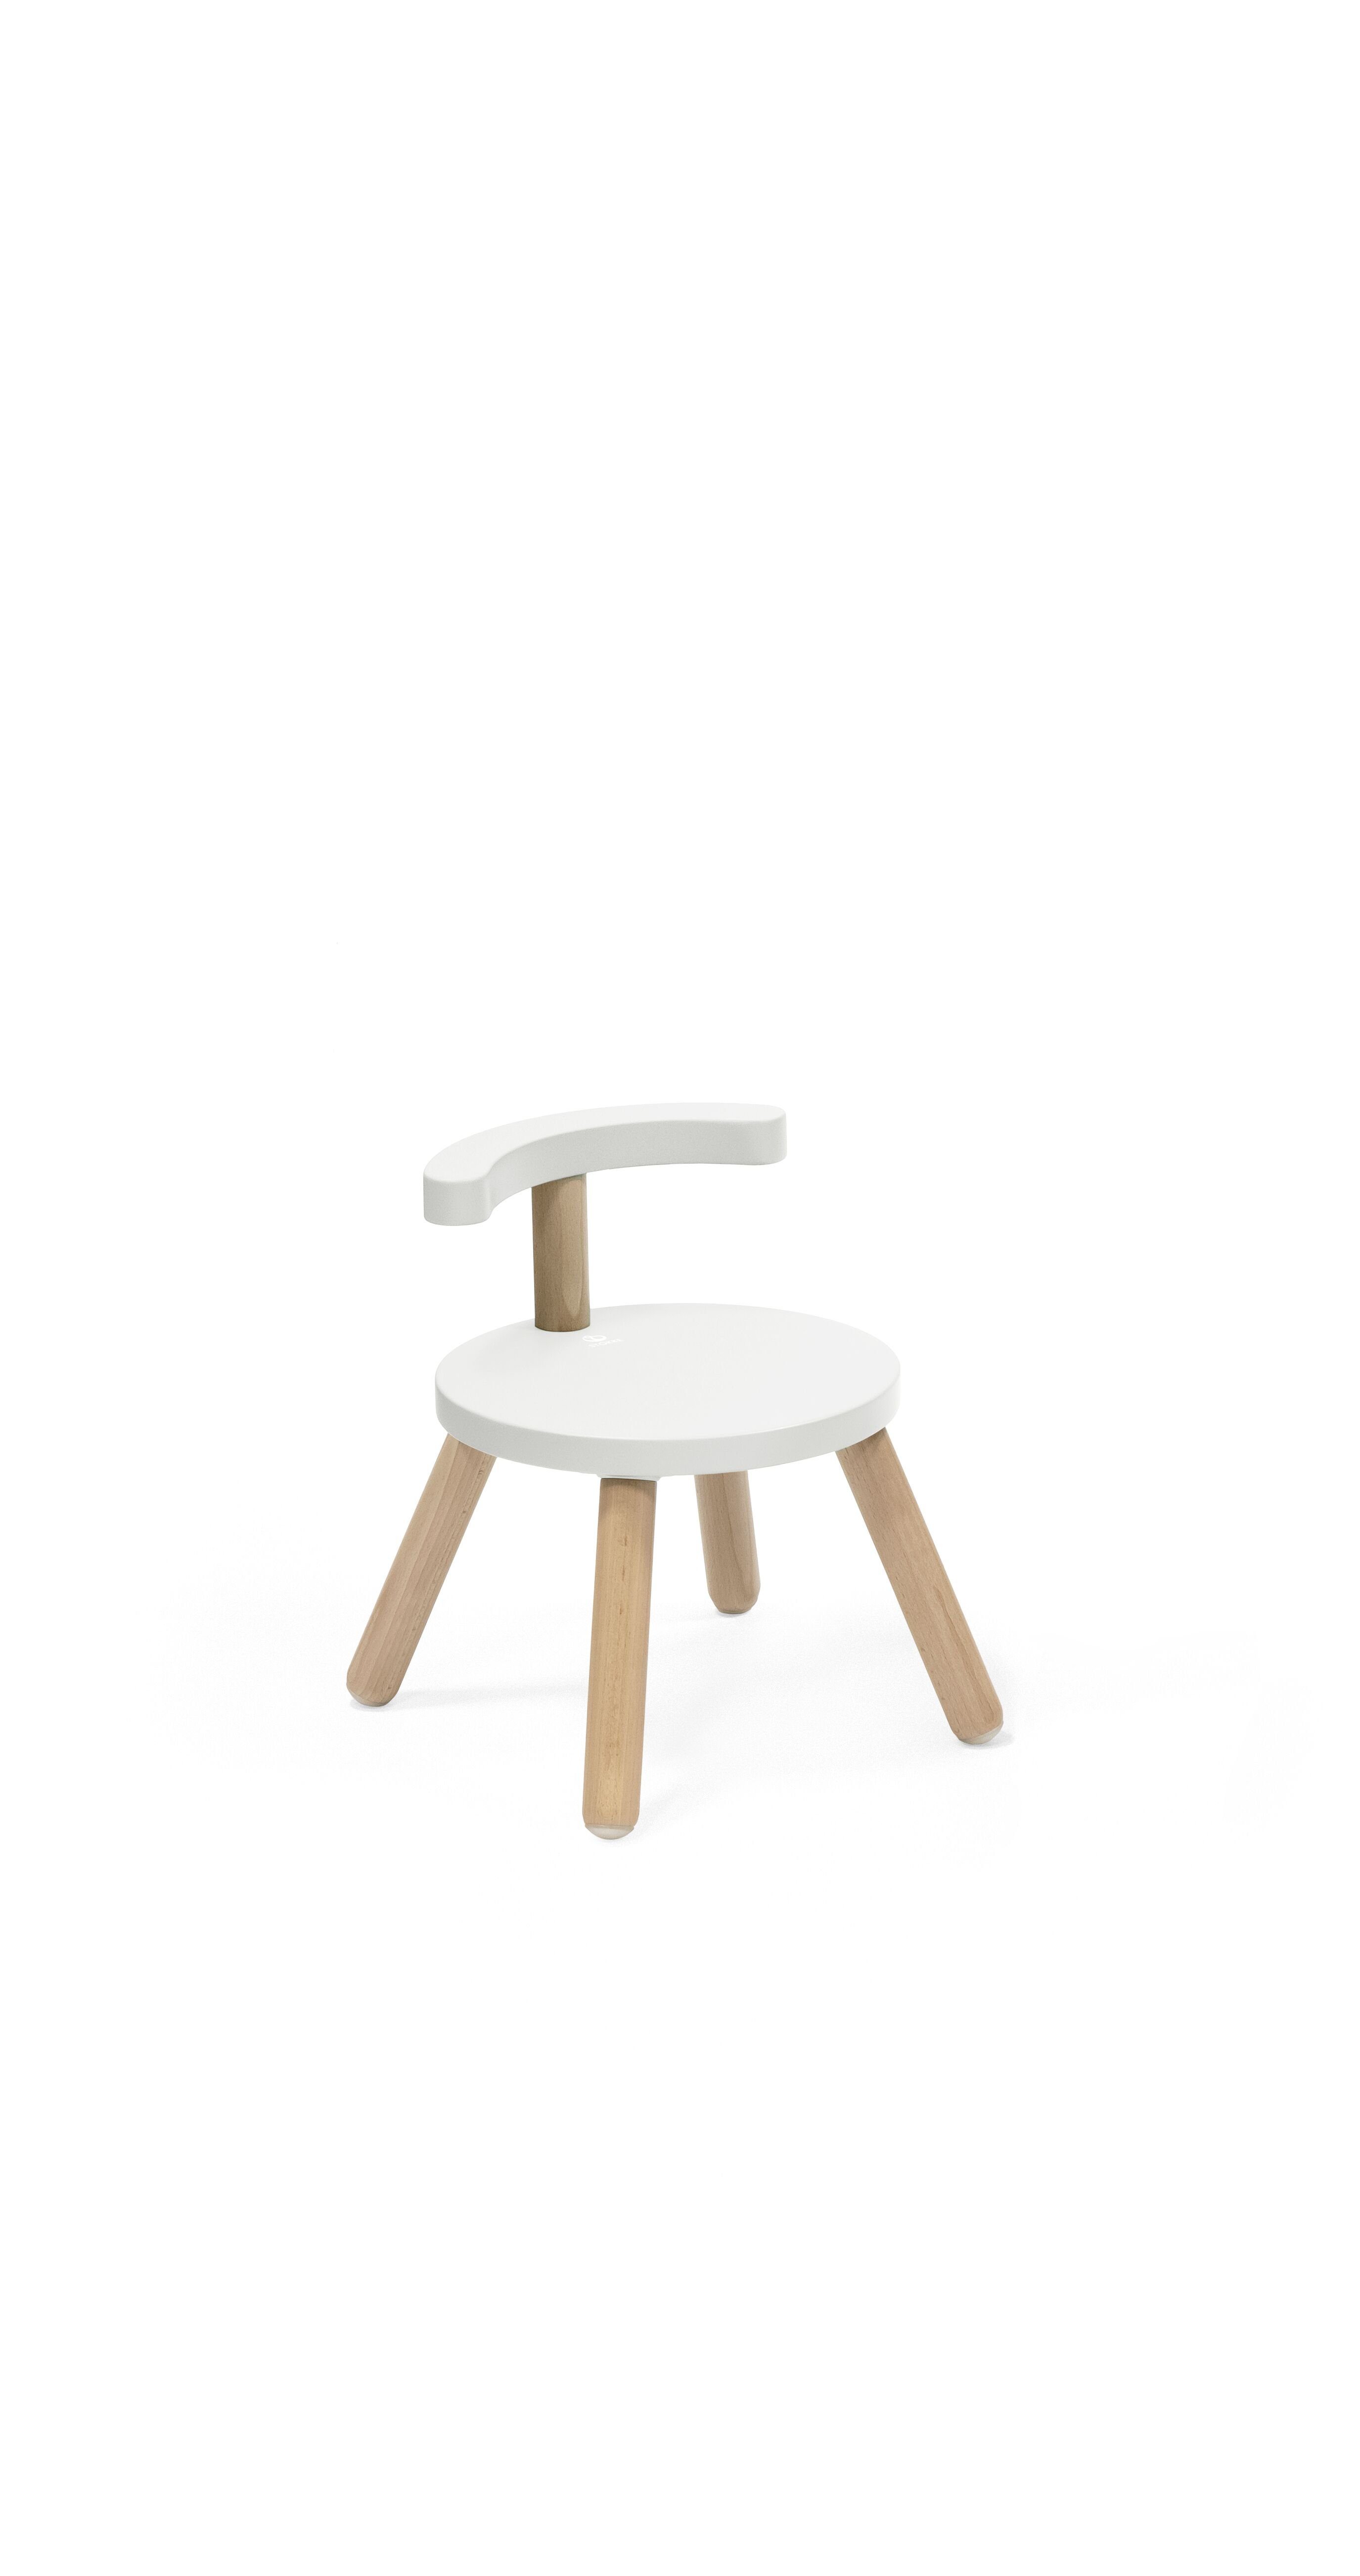 Stokke Kindersitzgruppe MuTable™ Stuhl V2, Kinderstuhl mit flexibler Sitzhöhe, Mit dem Stokke® MuTable™ Spieltisch kompatibel​ White